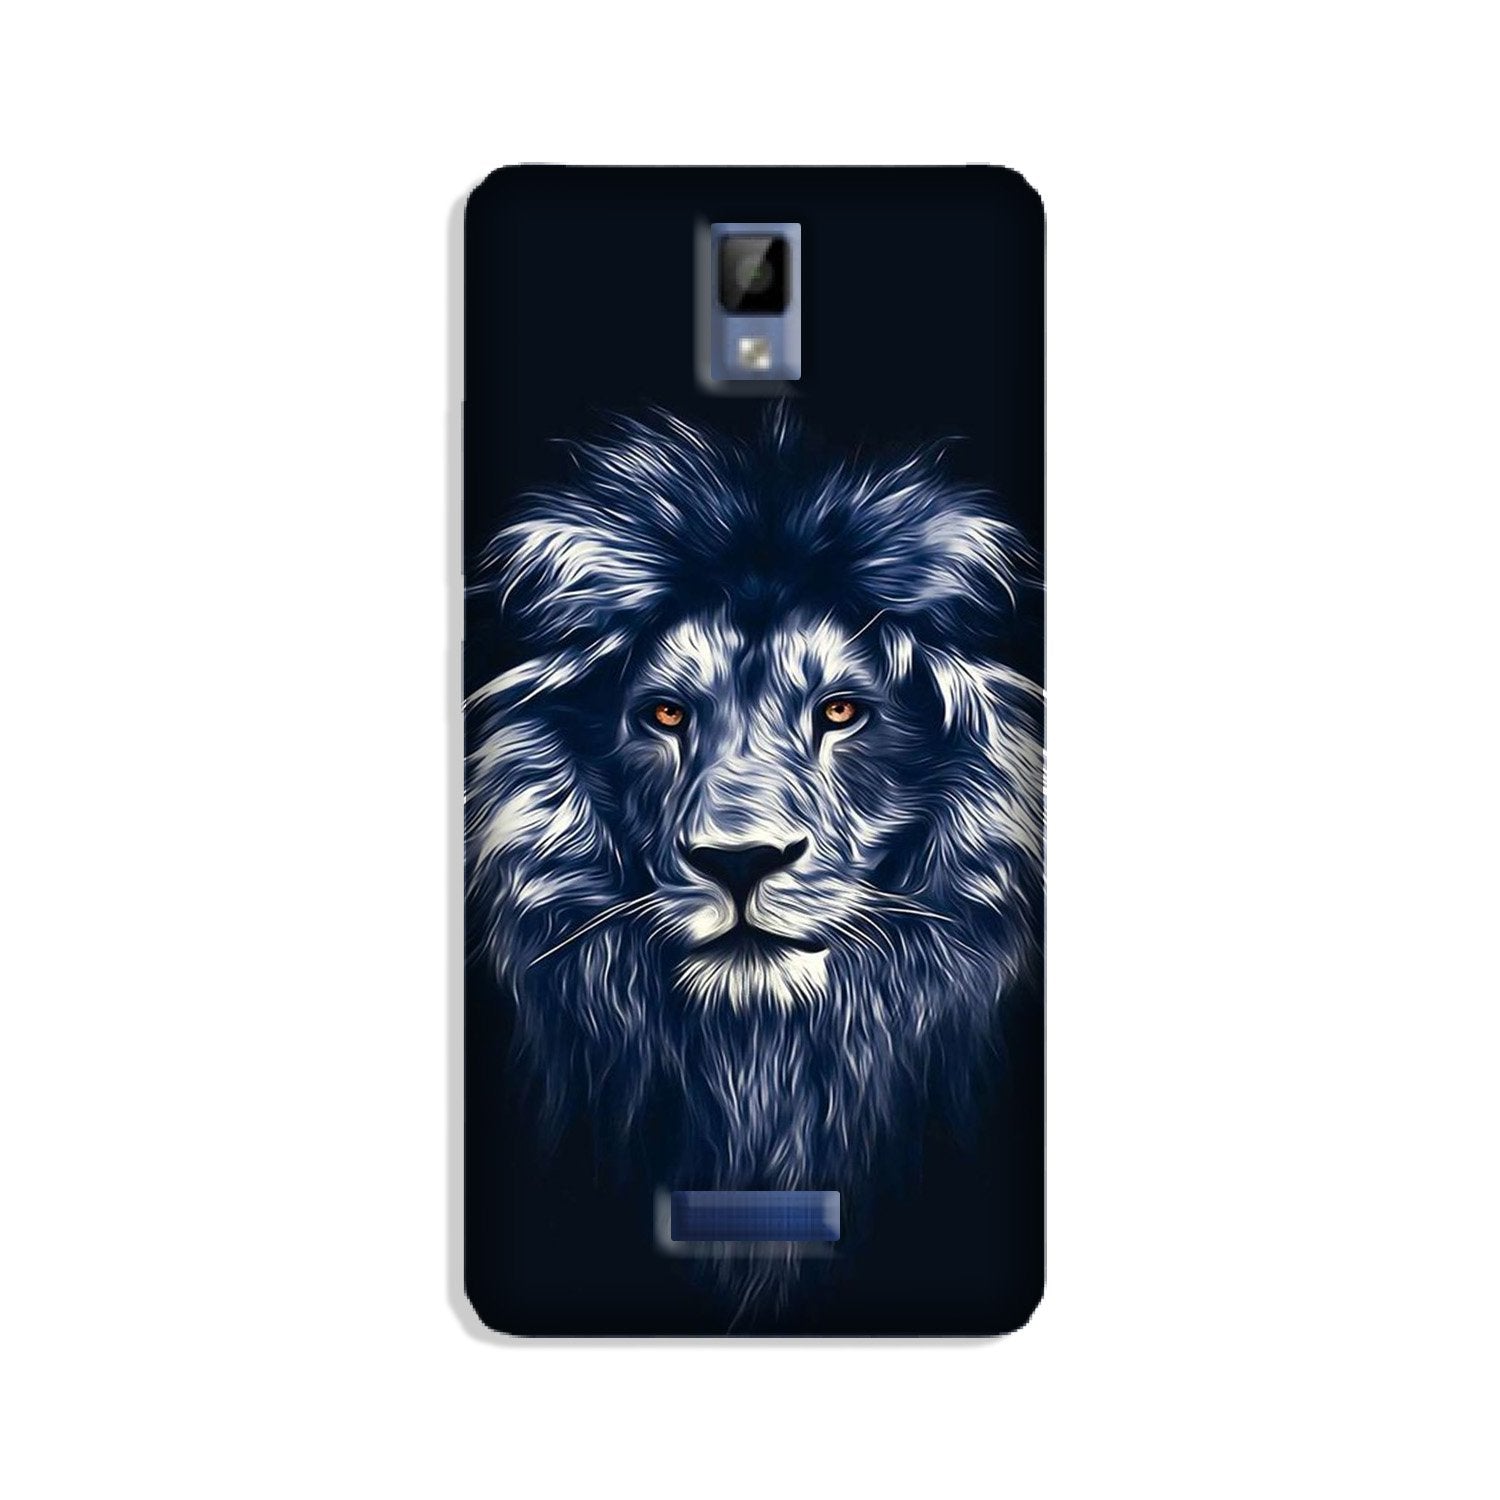 Lion Case for Gionee P7 (Design No. 281)